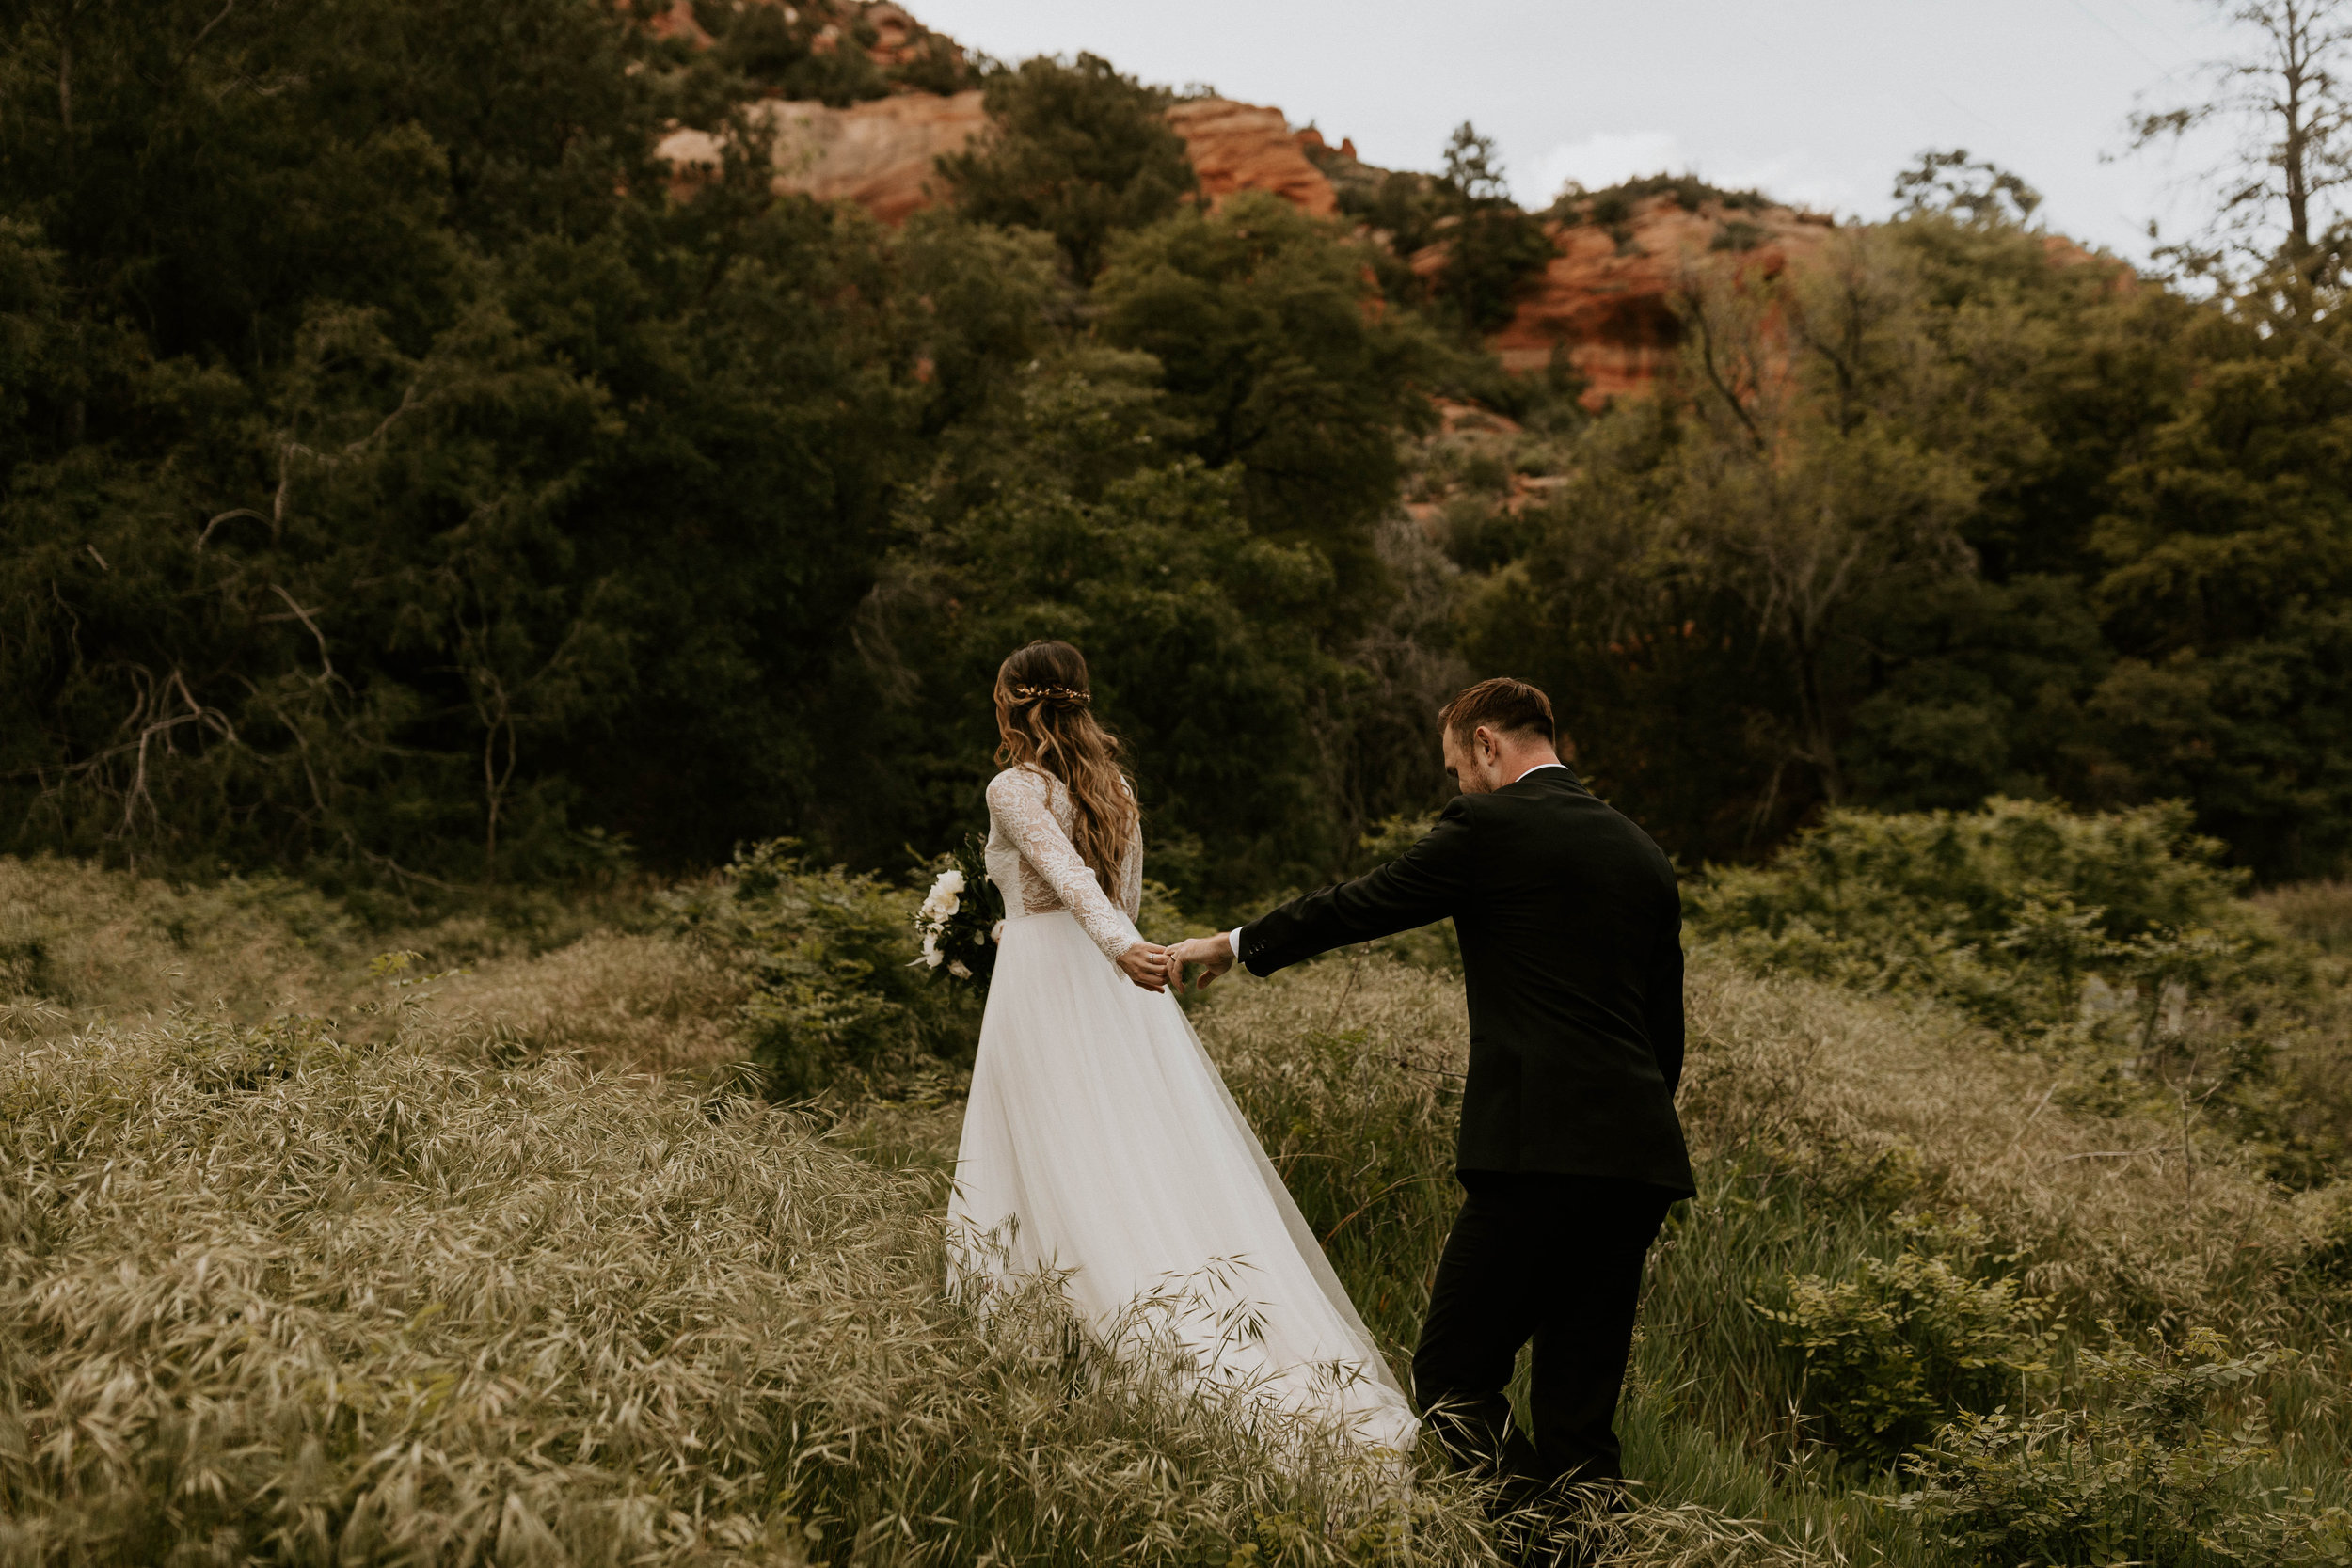 Intimate Wedding Slide Rock State Park in Sedona, Arizona 